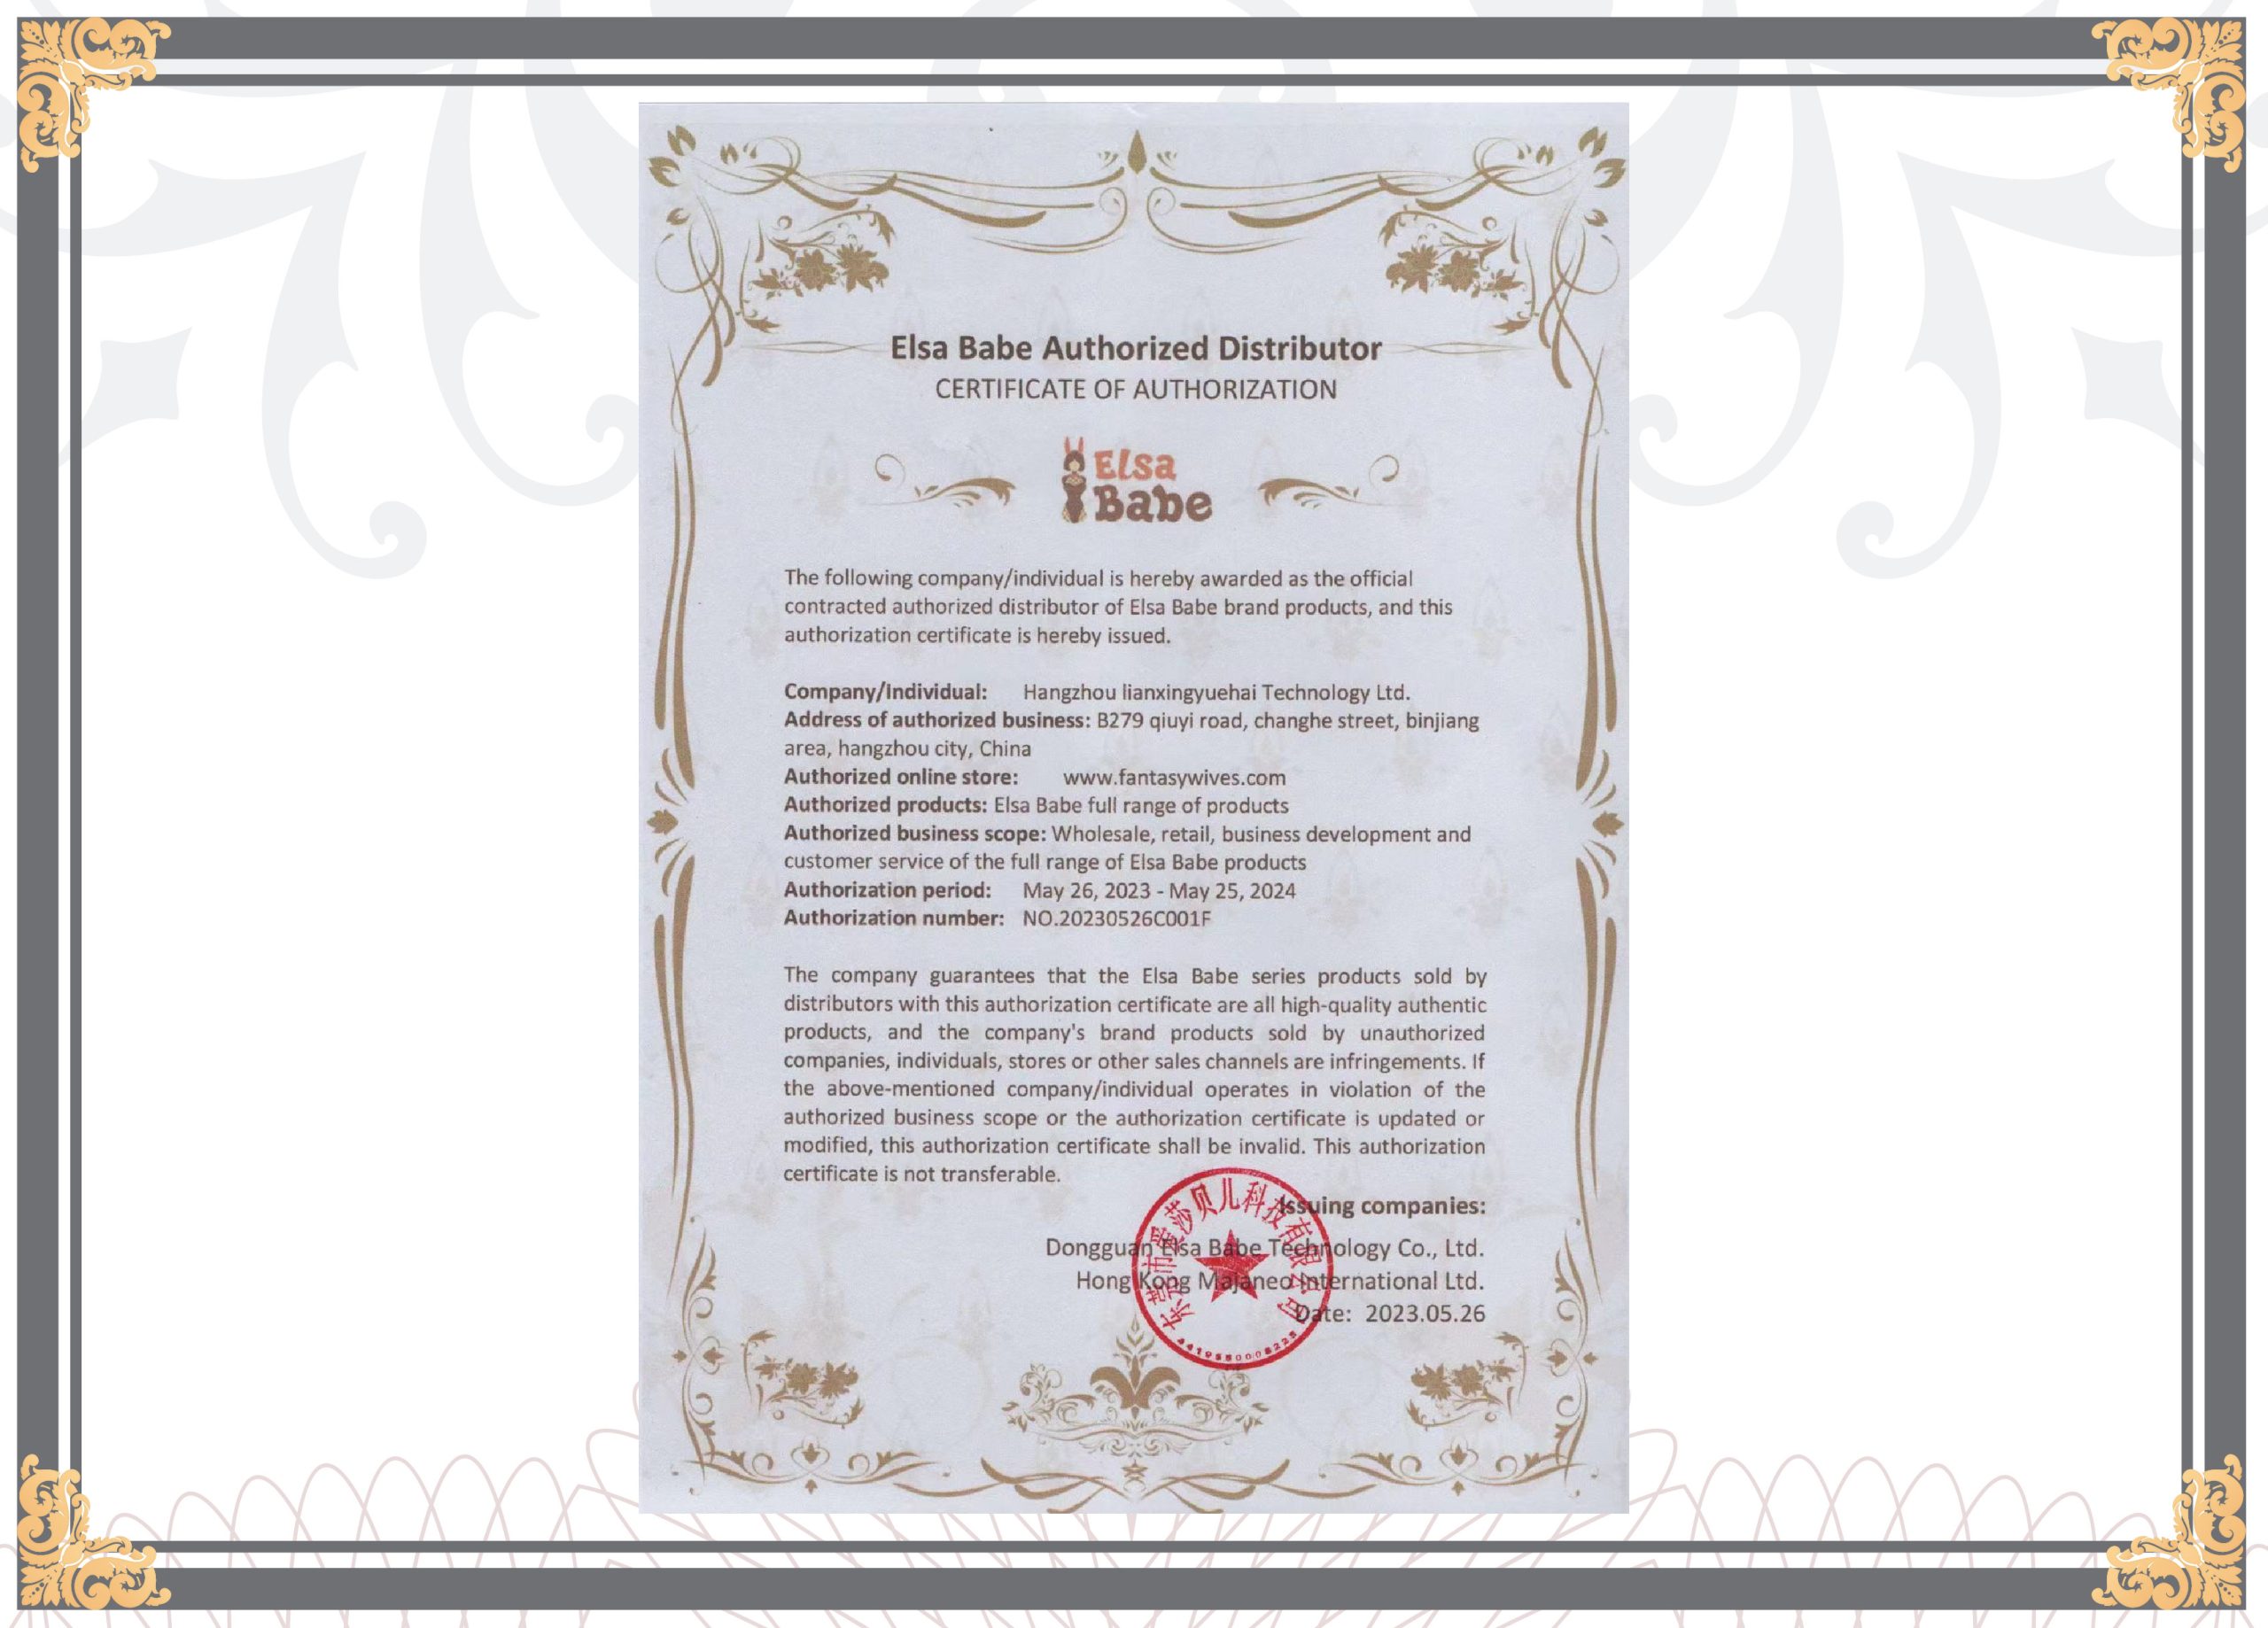 ElsaBabe Certificate